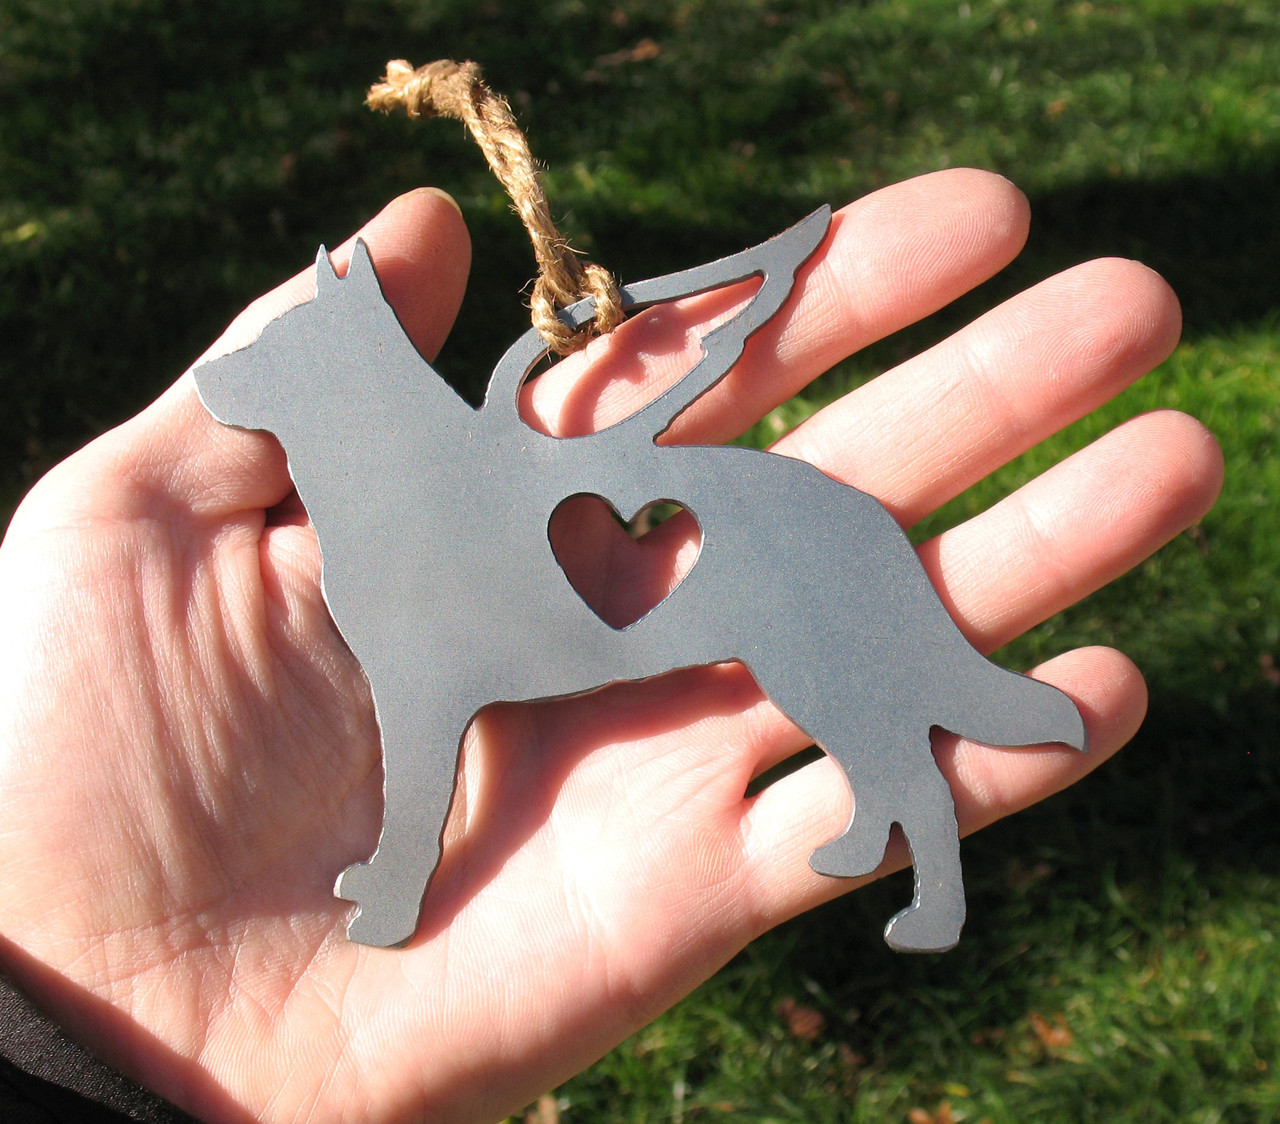 Australian Cattle Dog 3 Pet Loss Gift Ornament Angel - Pet Memorial - Dog Sympathy Remembrance Gift - Metal Dog Christmas Ornament